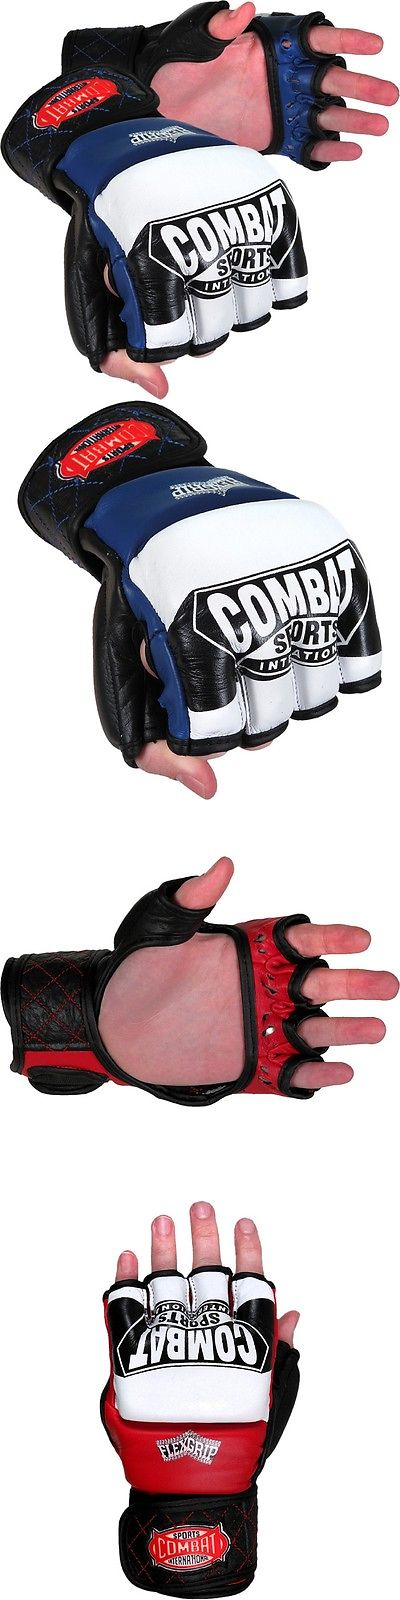 Combat sports mma amateur competition gloves